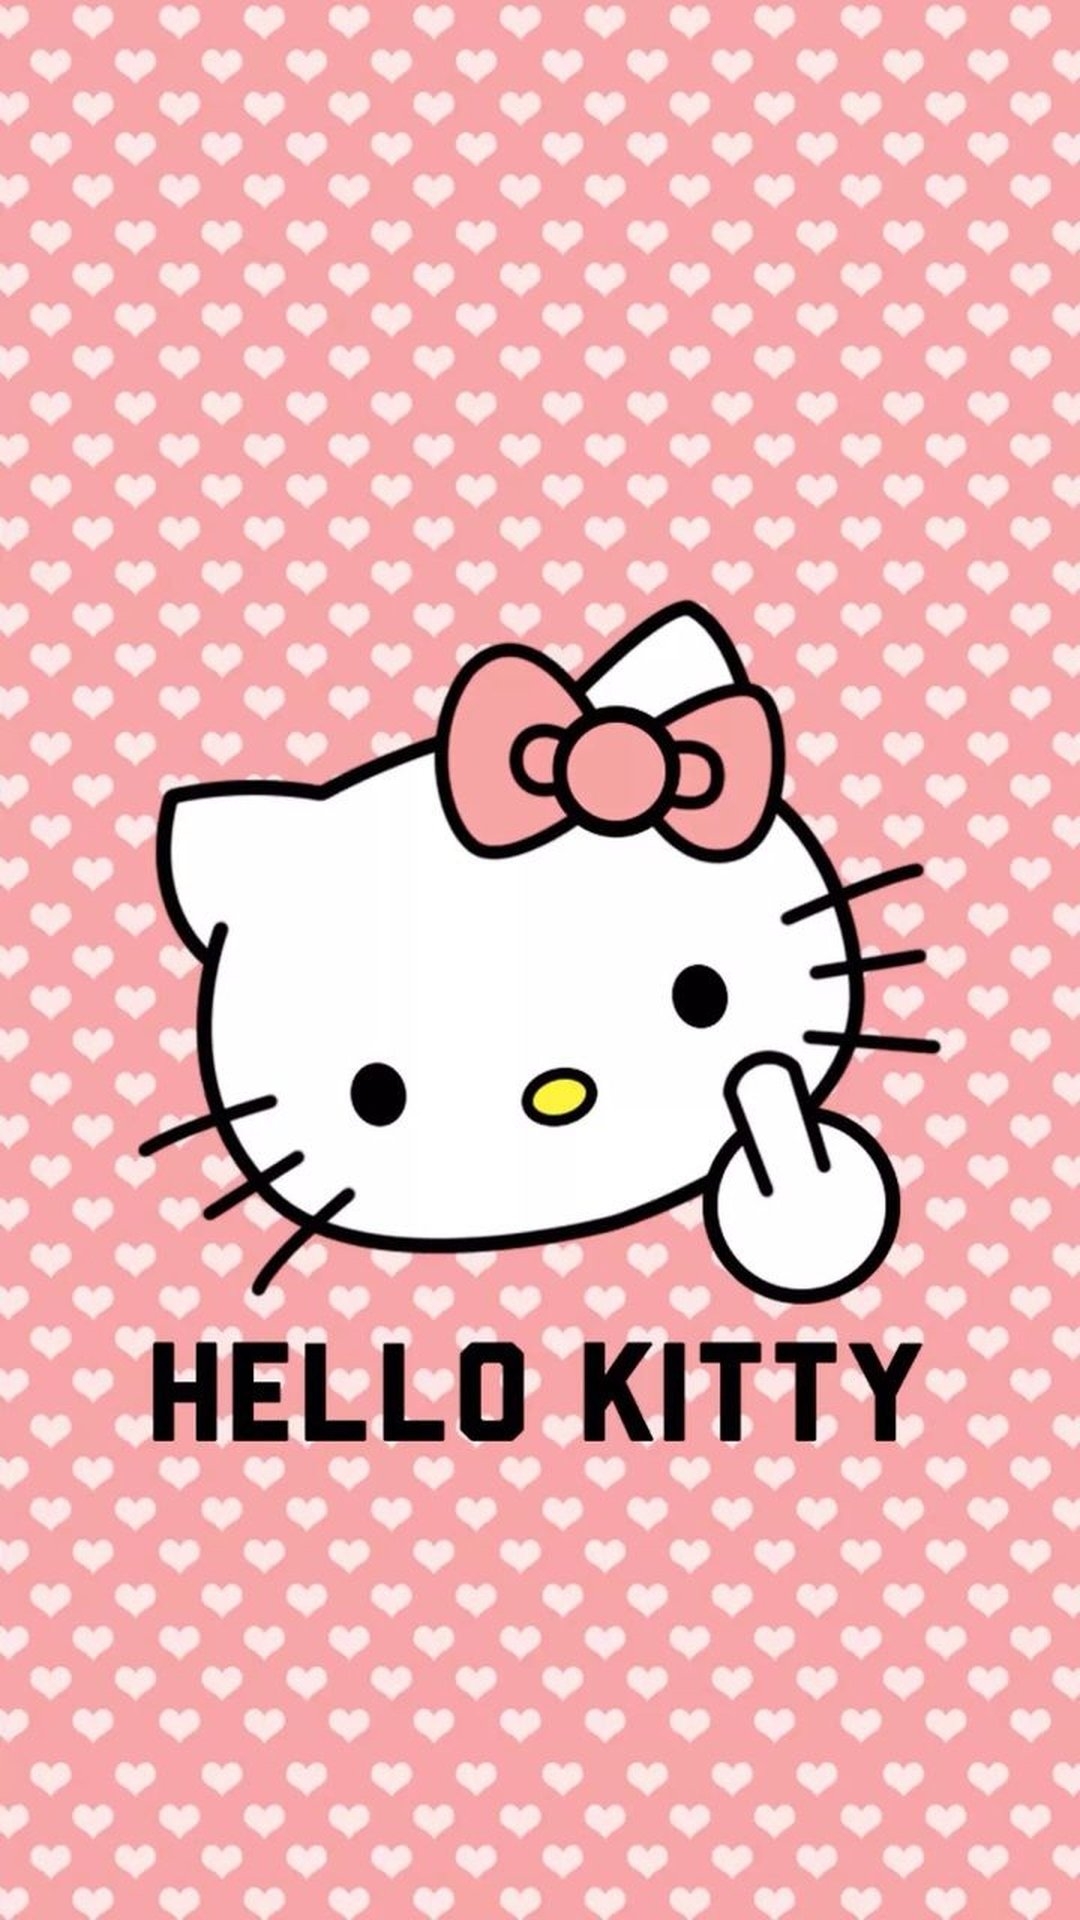 Заставка hello. Х̆̈ӗ̈л̆̈л̆̈о̆̈ў̈ К̆̈Й̈Т̆̈Й̈. Хелло Китти. Хеллоу Китти hello Kitty hello Kitty. Милый hello Kitty.